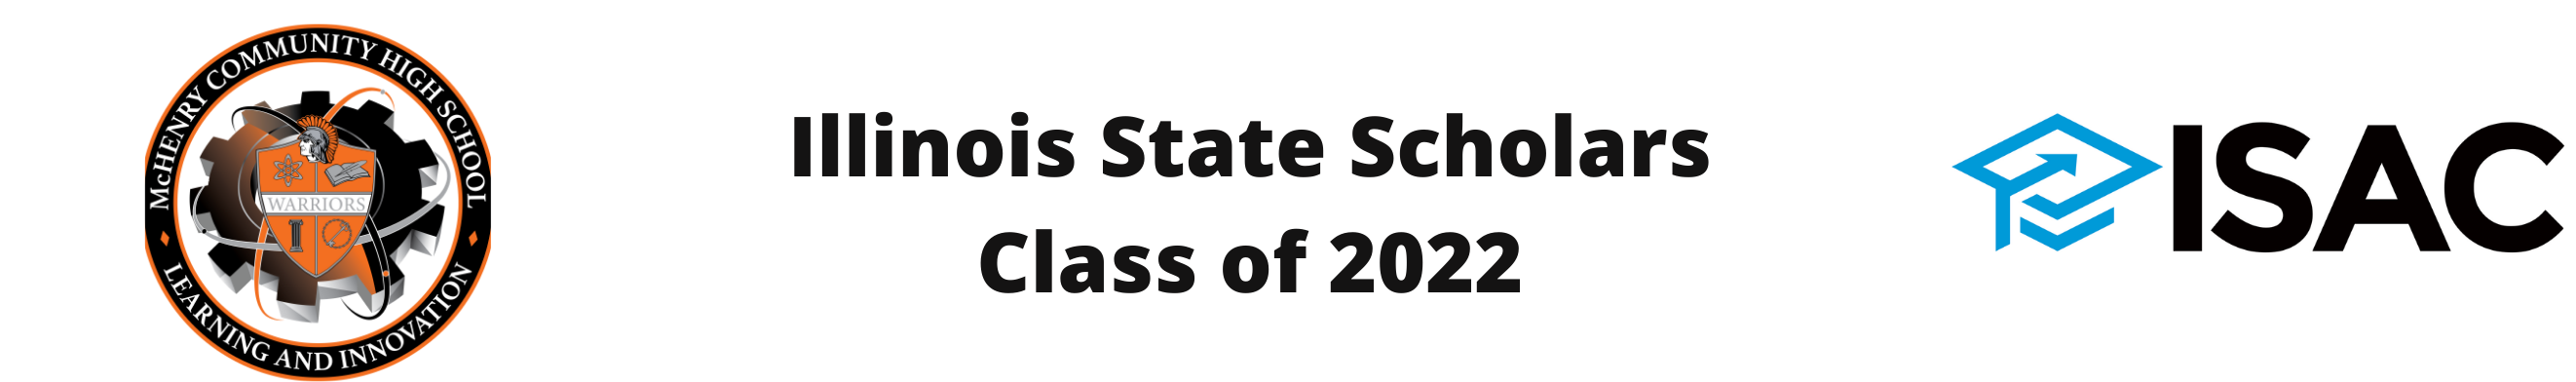 Illinois State Scholars Class of 2022